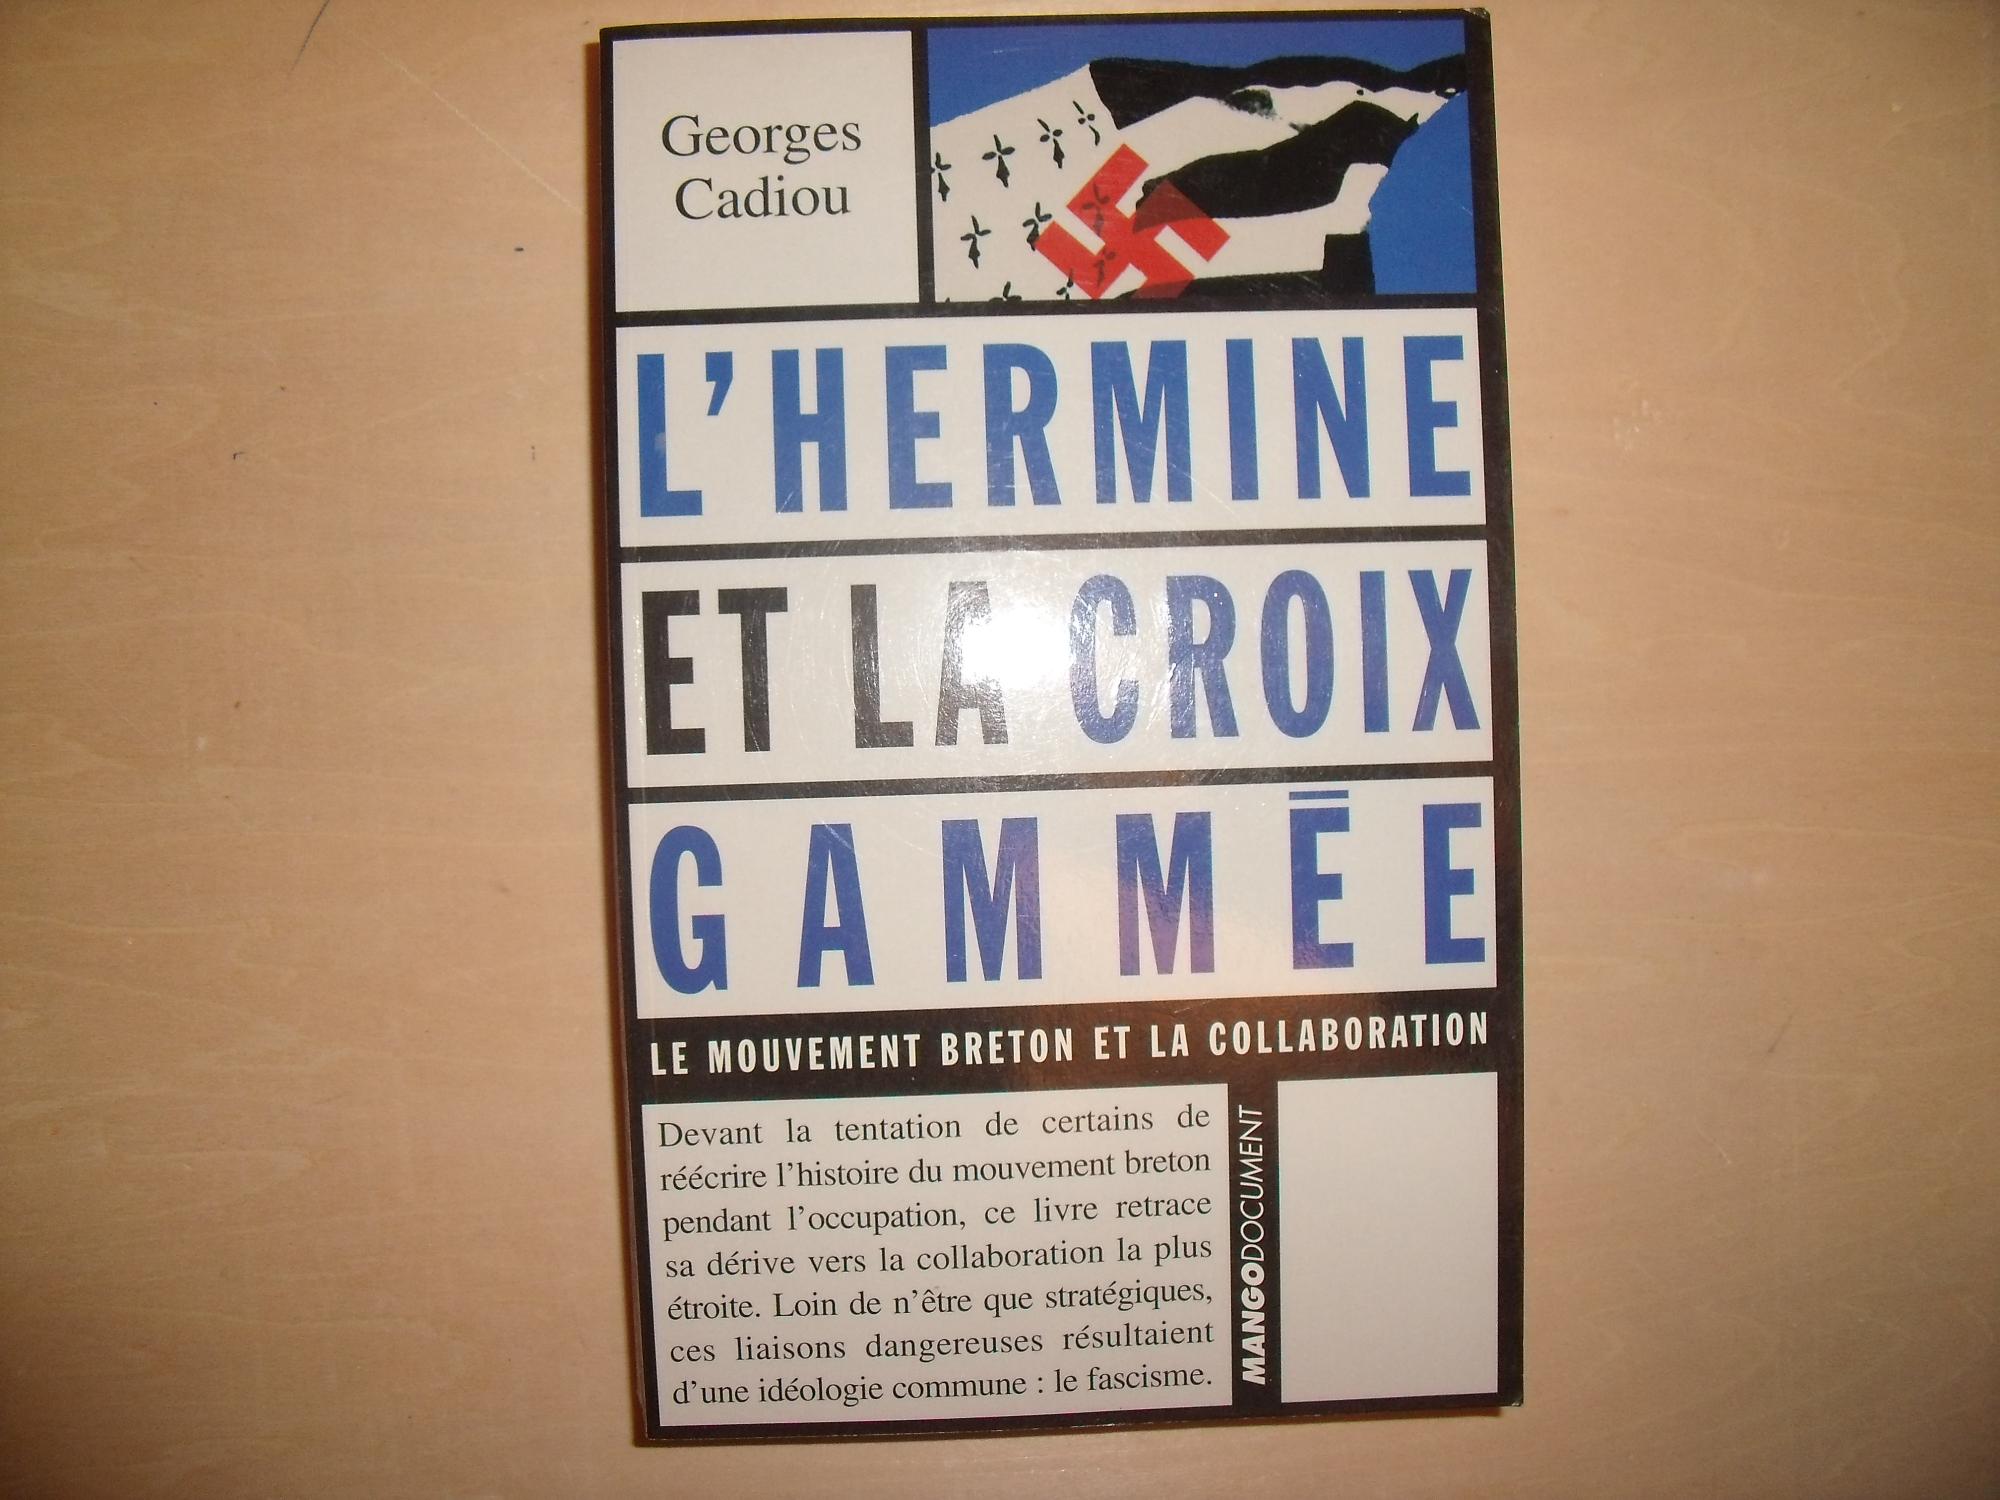 L'HERMINE ET LA CROIX GAMMEE - GEORGES CADIOU